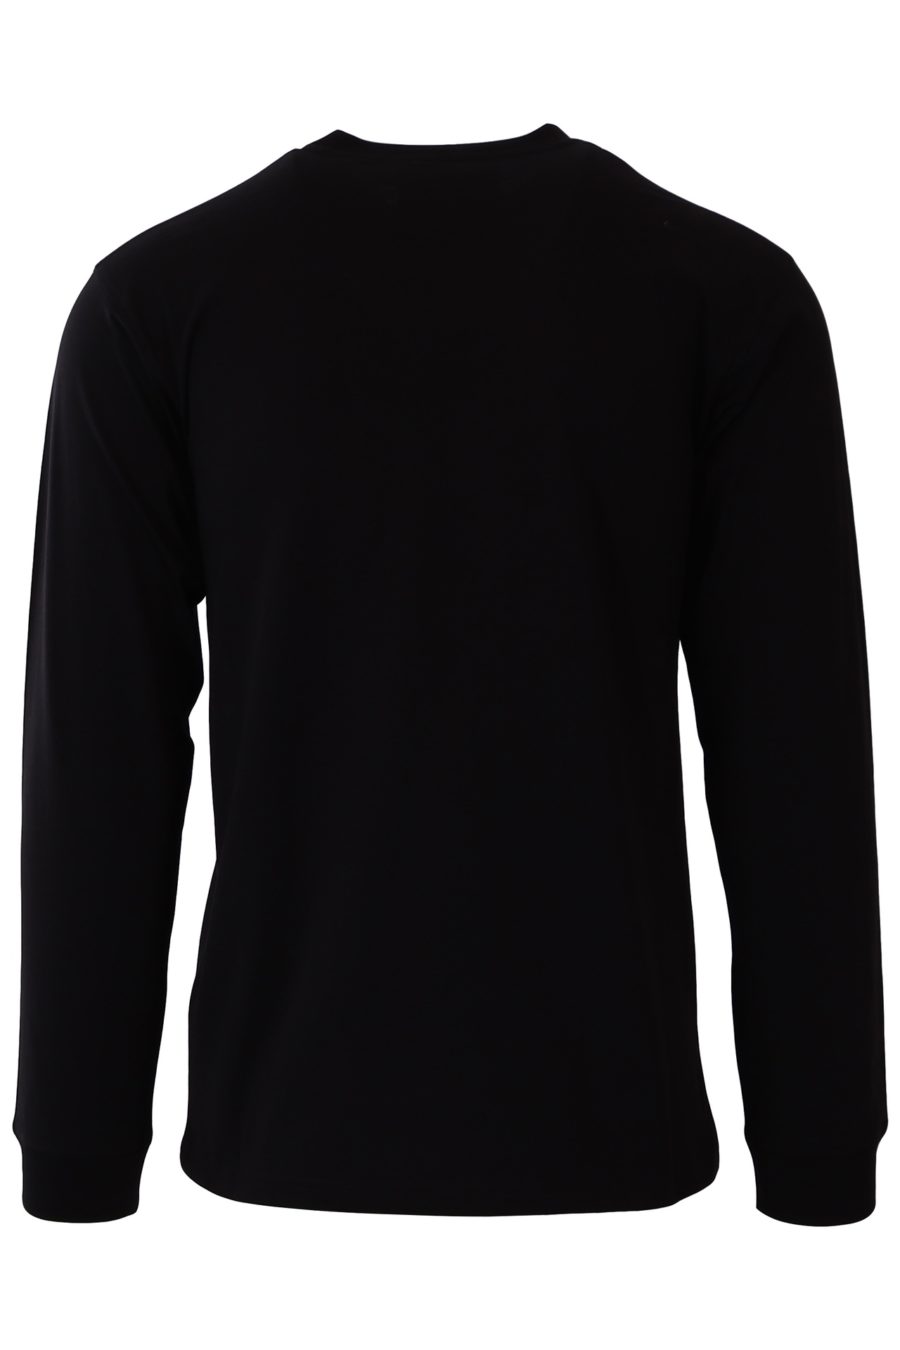 Camiseta manga larga Moschino Couture negra con logo - dc4f9773183c87902cc023ba984dc38bcc31325b